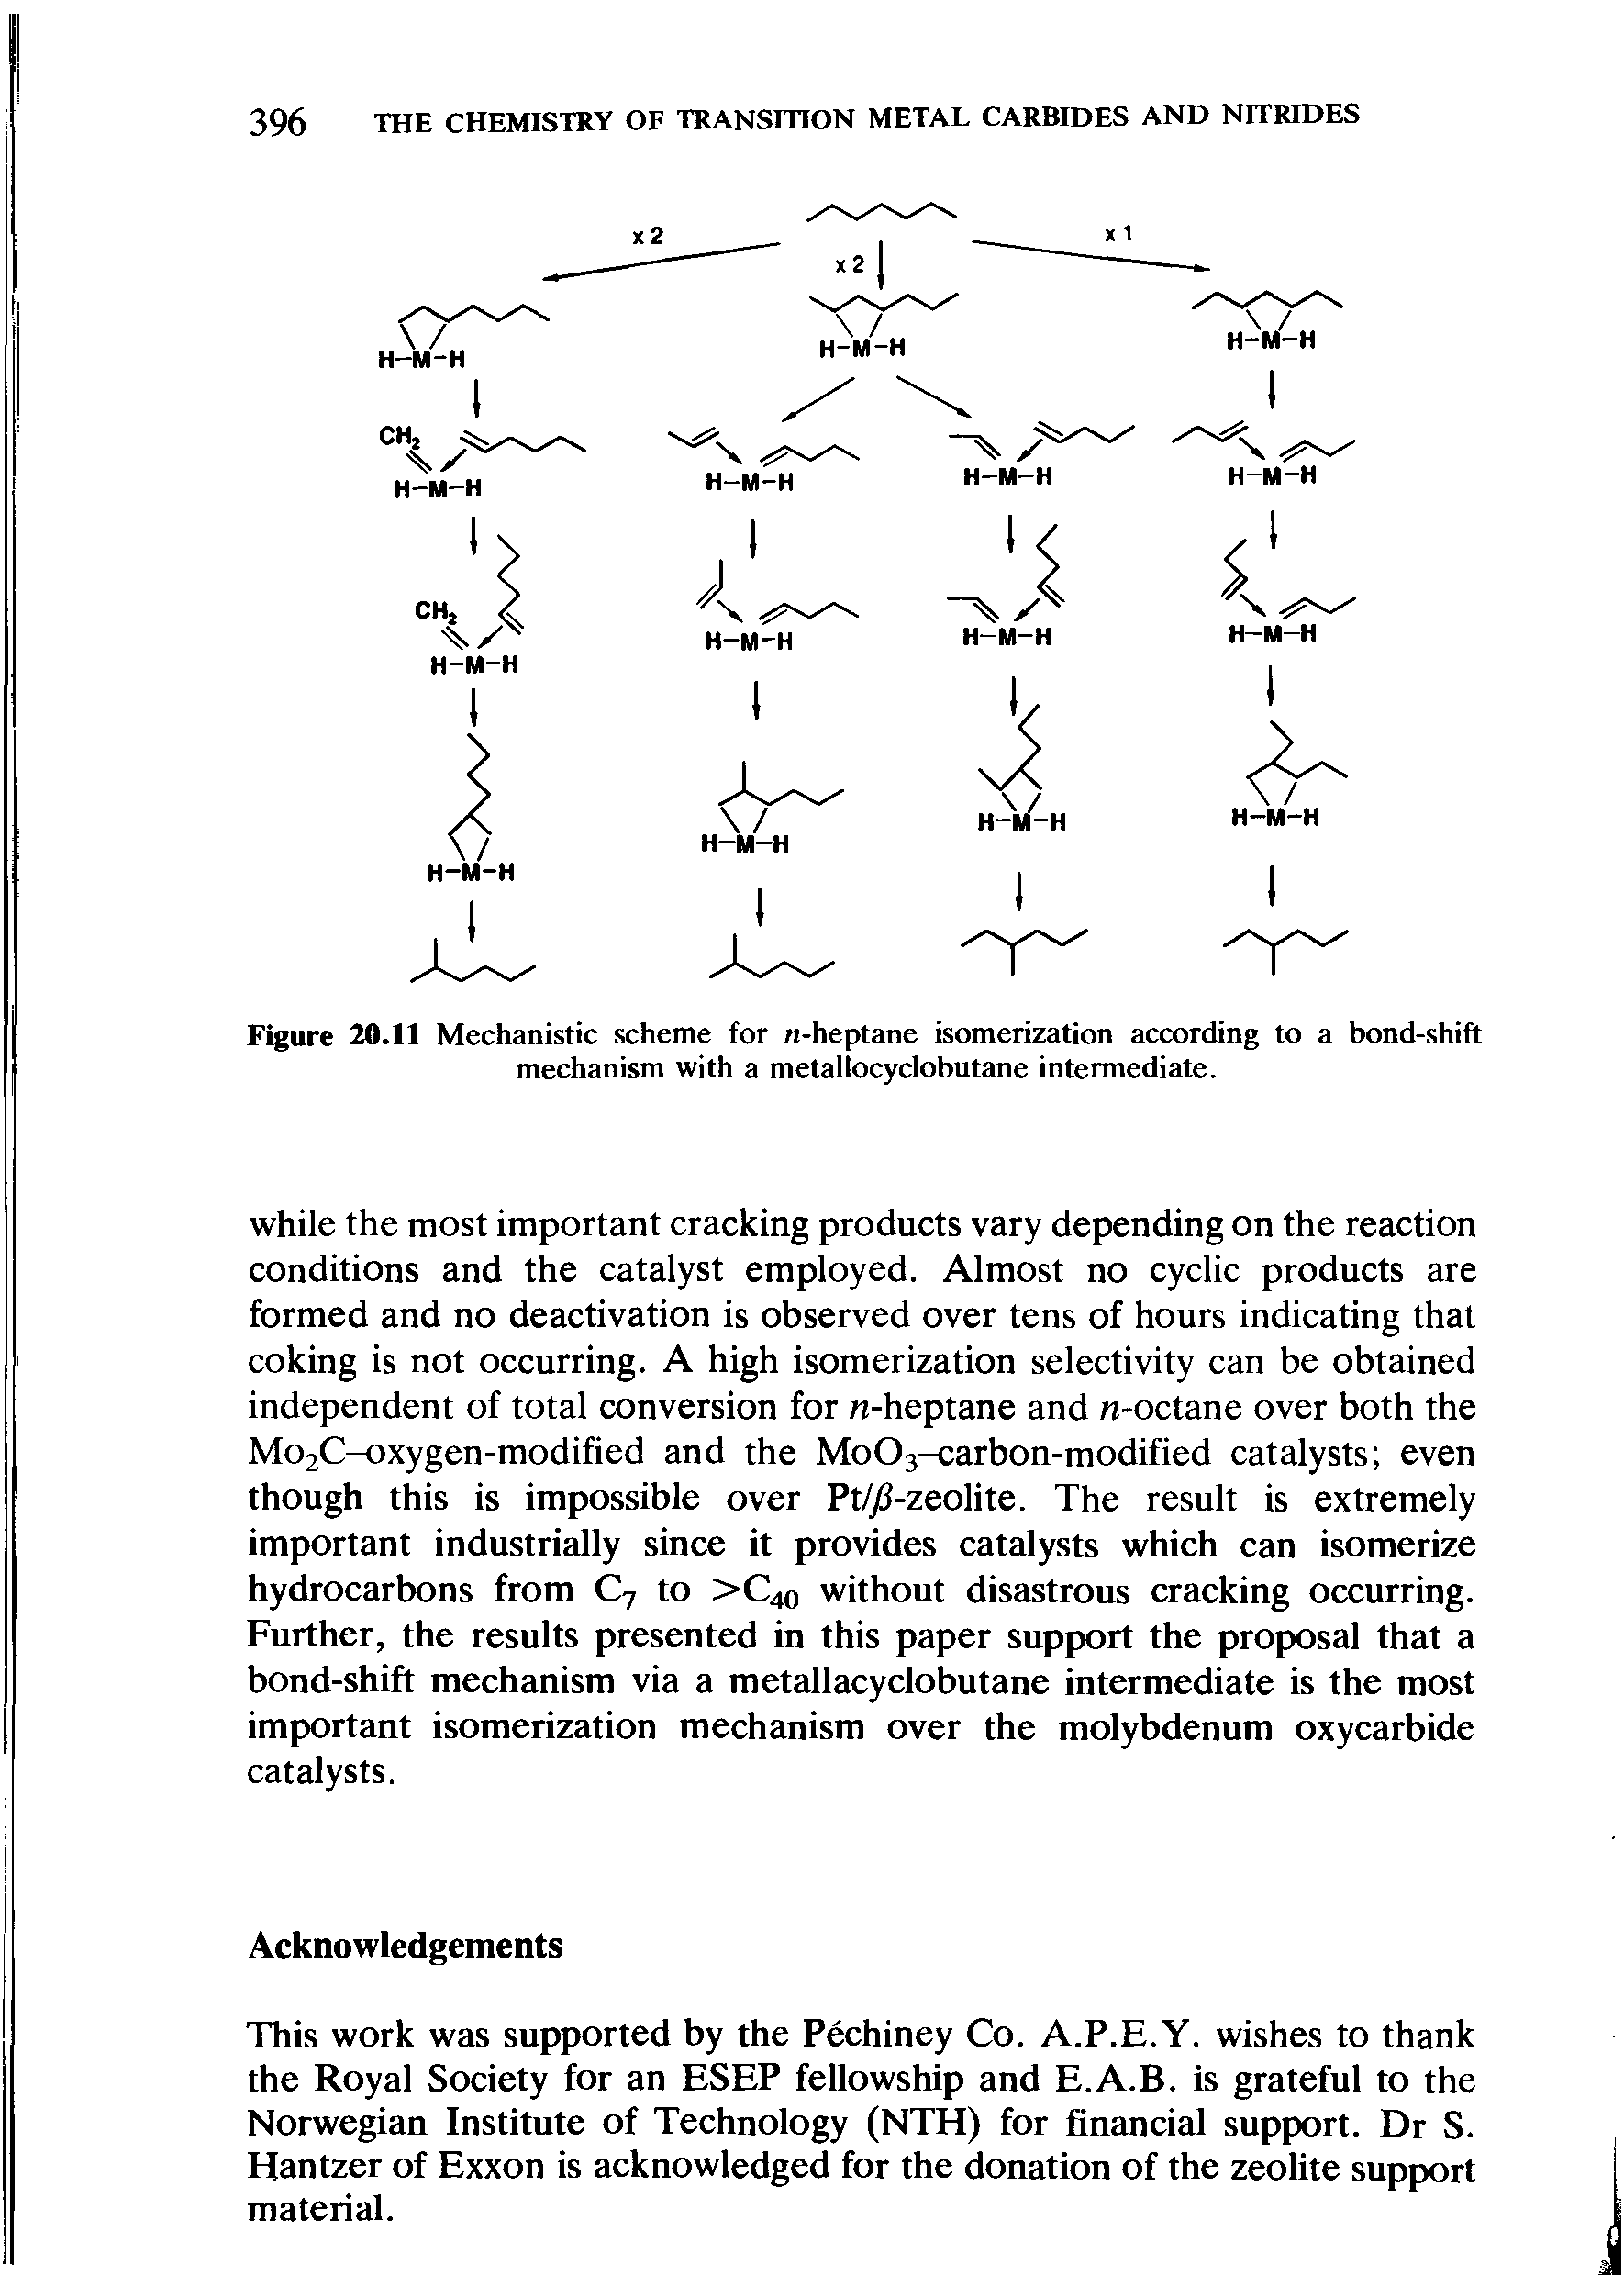 Figure 20.11 Mechanistic scheme for n-heptane isomerization according to a bond-shift mechanism with a metallocyclobutane intermediate.